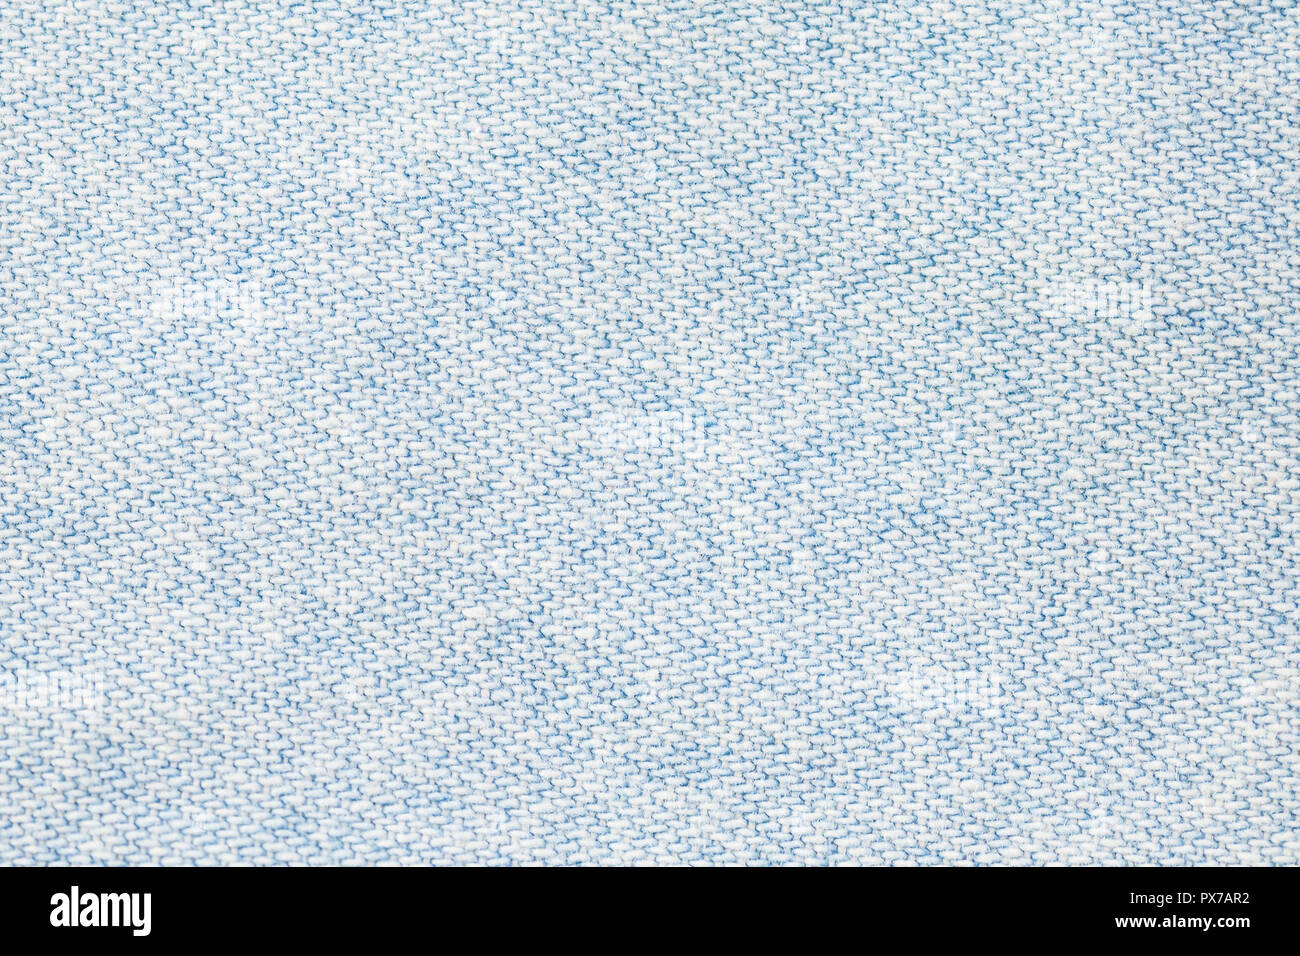 textile background - light blue denim fabric Stock Photo - Alamy